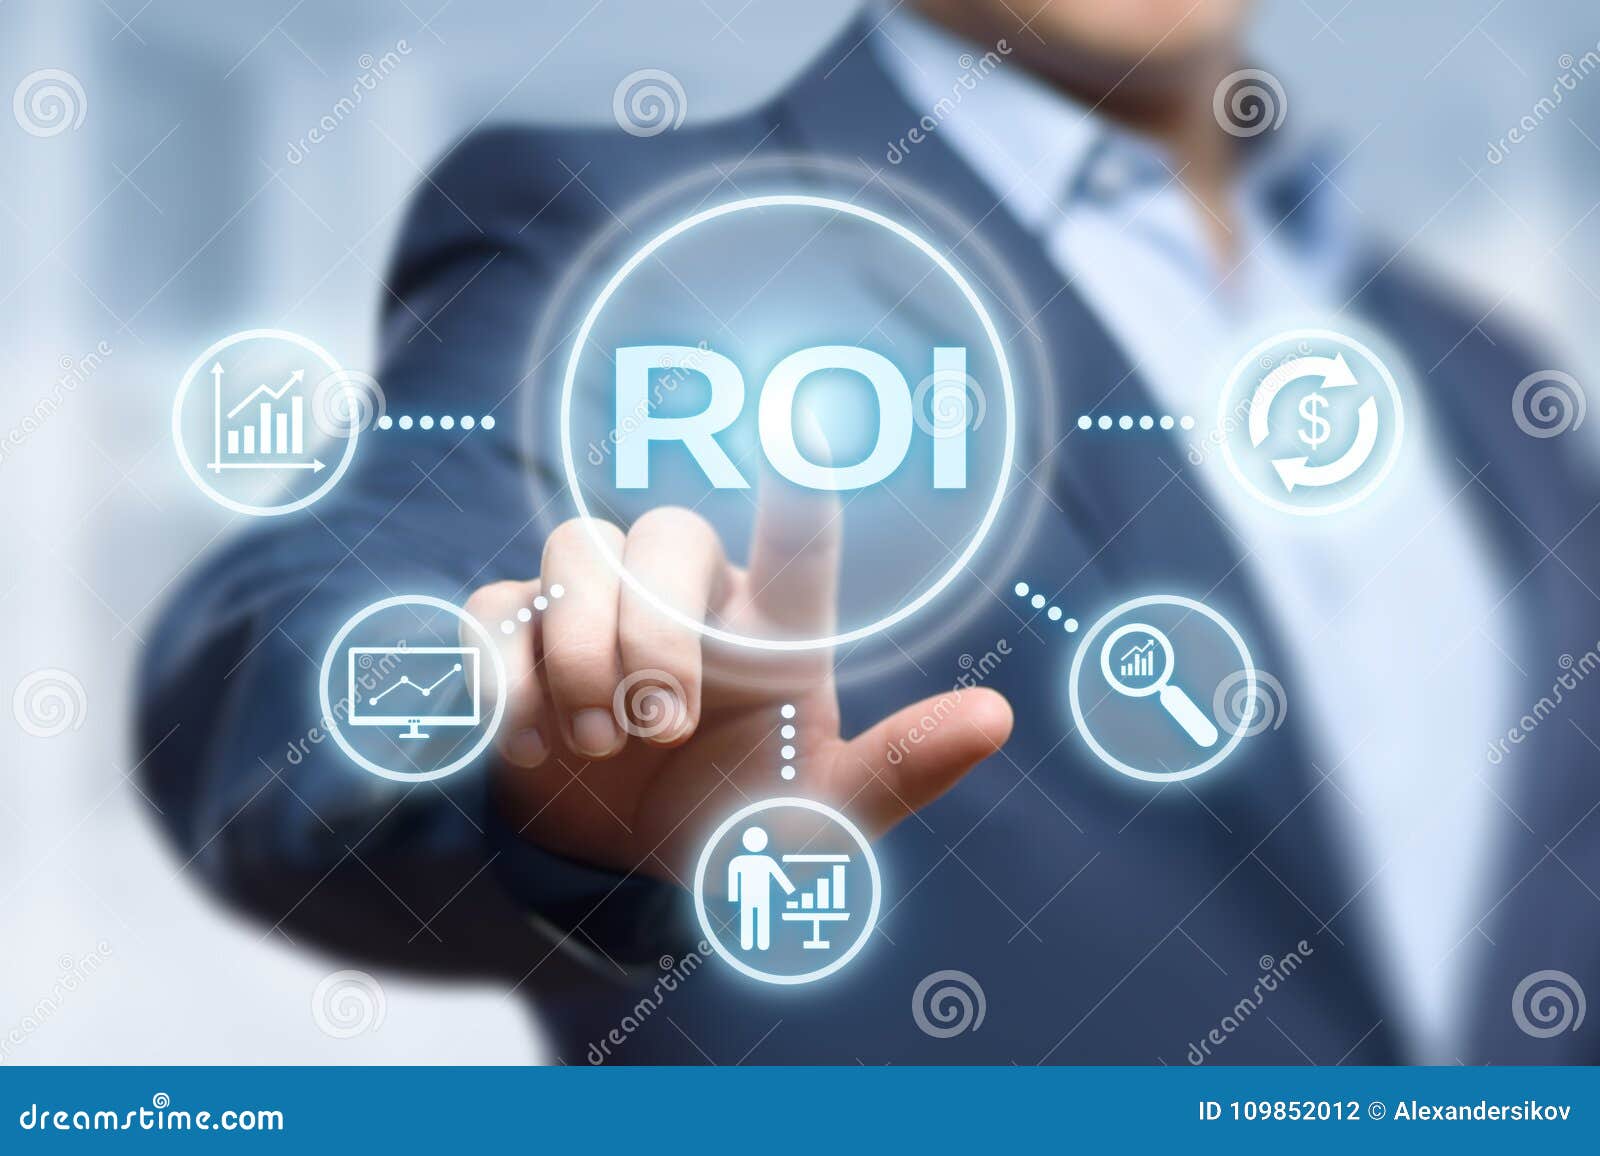 roi return on investment finance profit success internet business technology concept